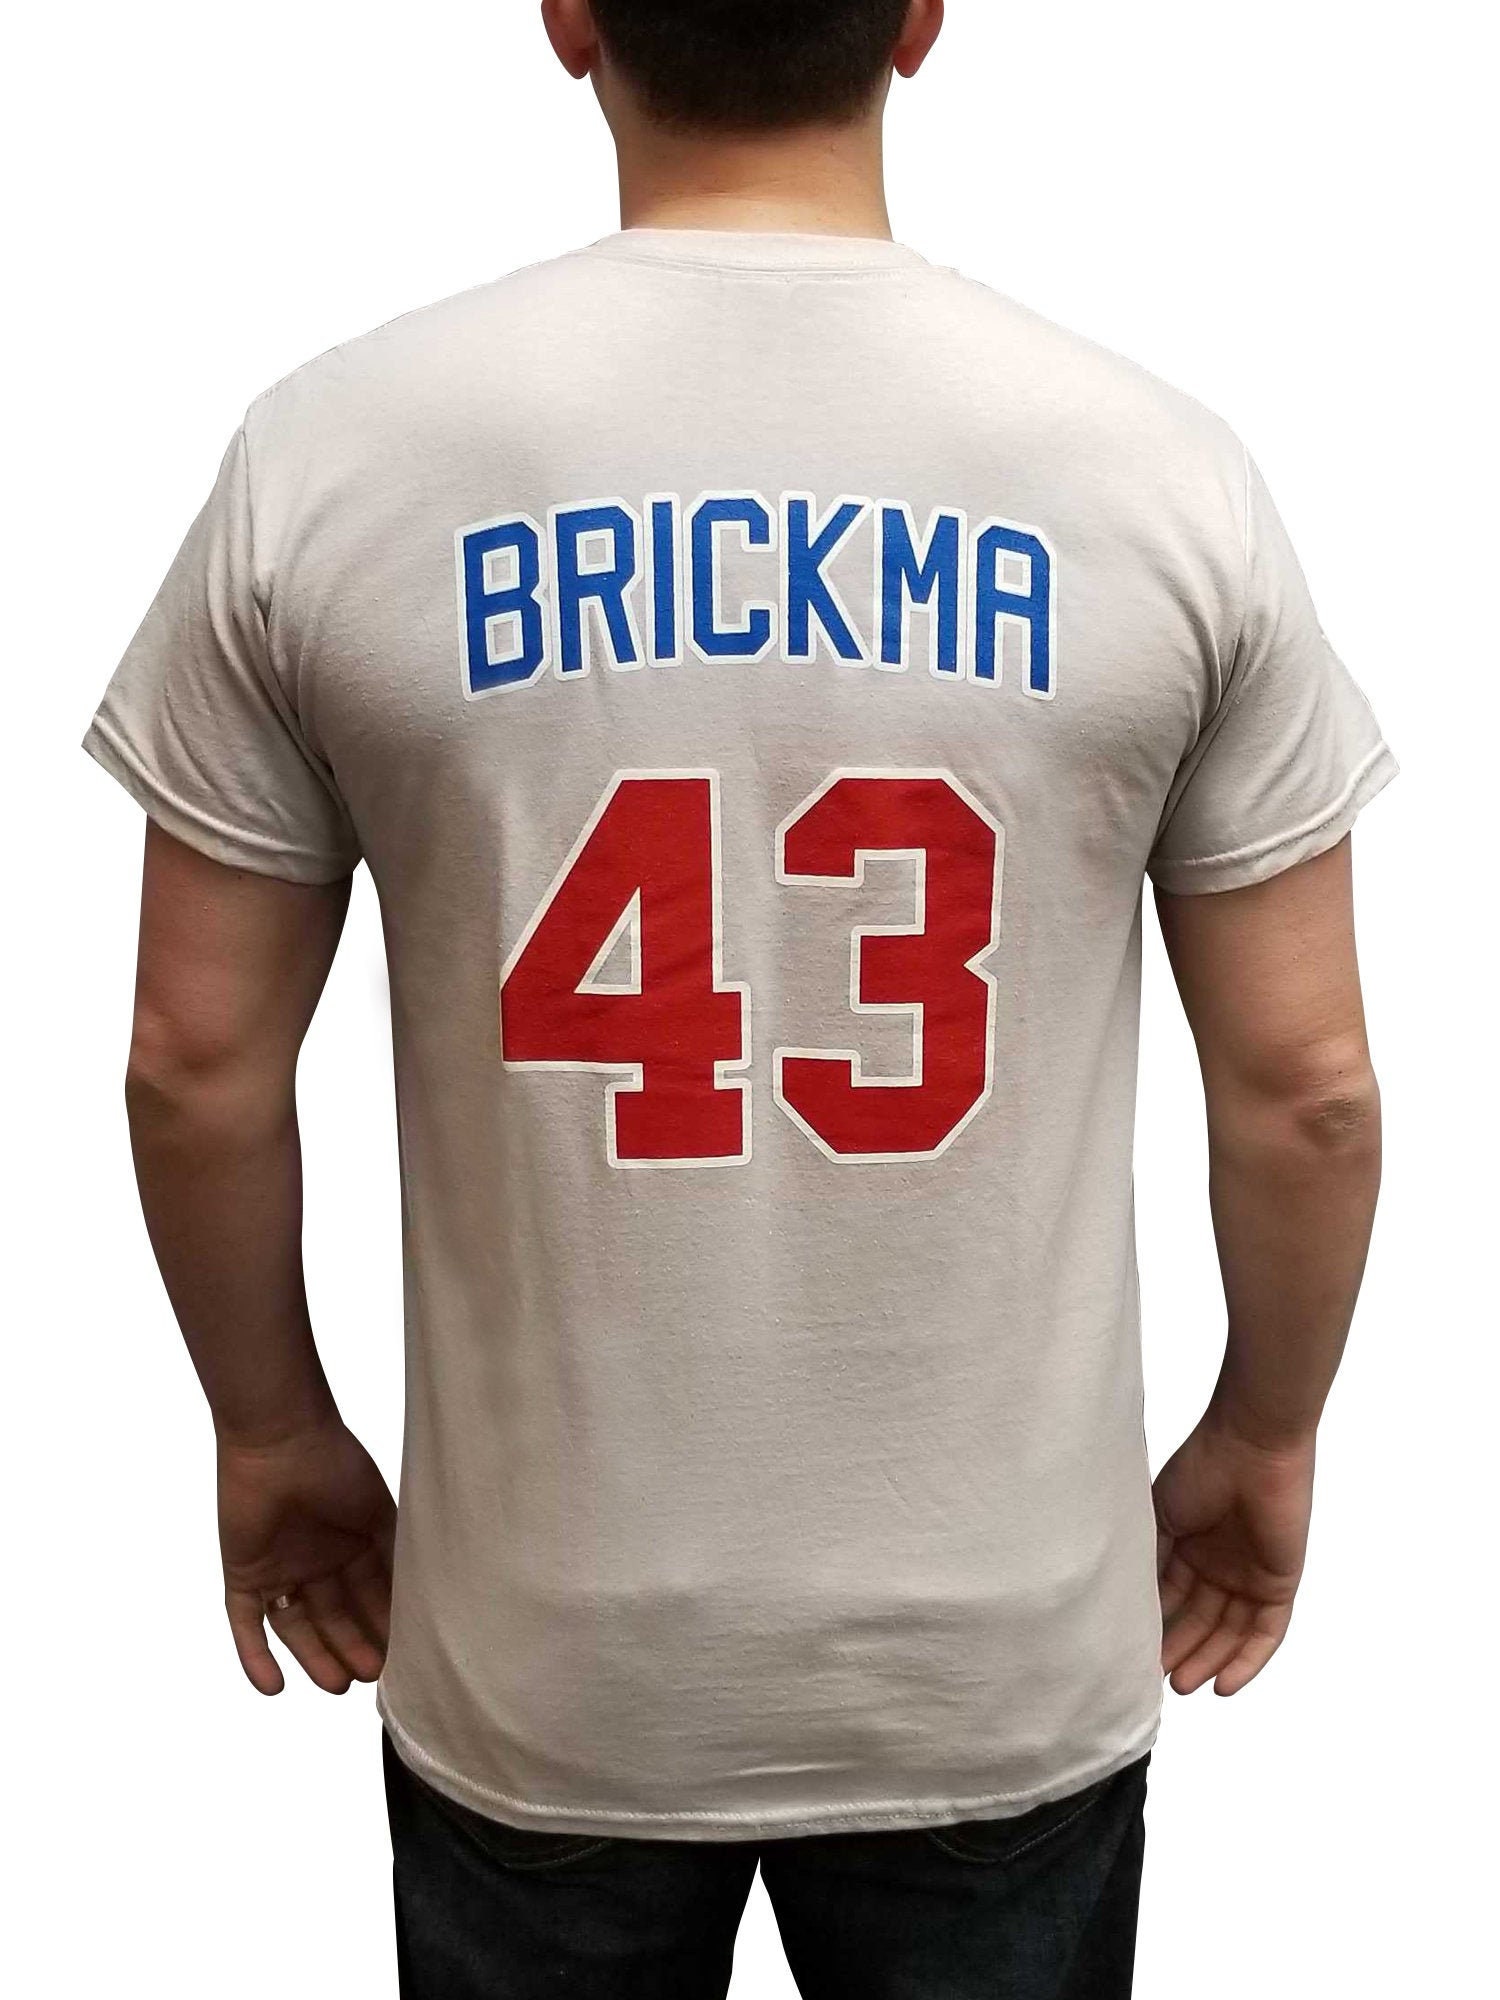 Phil Brickma Jersey T-shirt 43 Pitching Coach Baseball Movie - Etsy